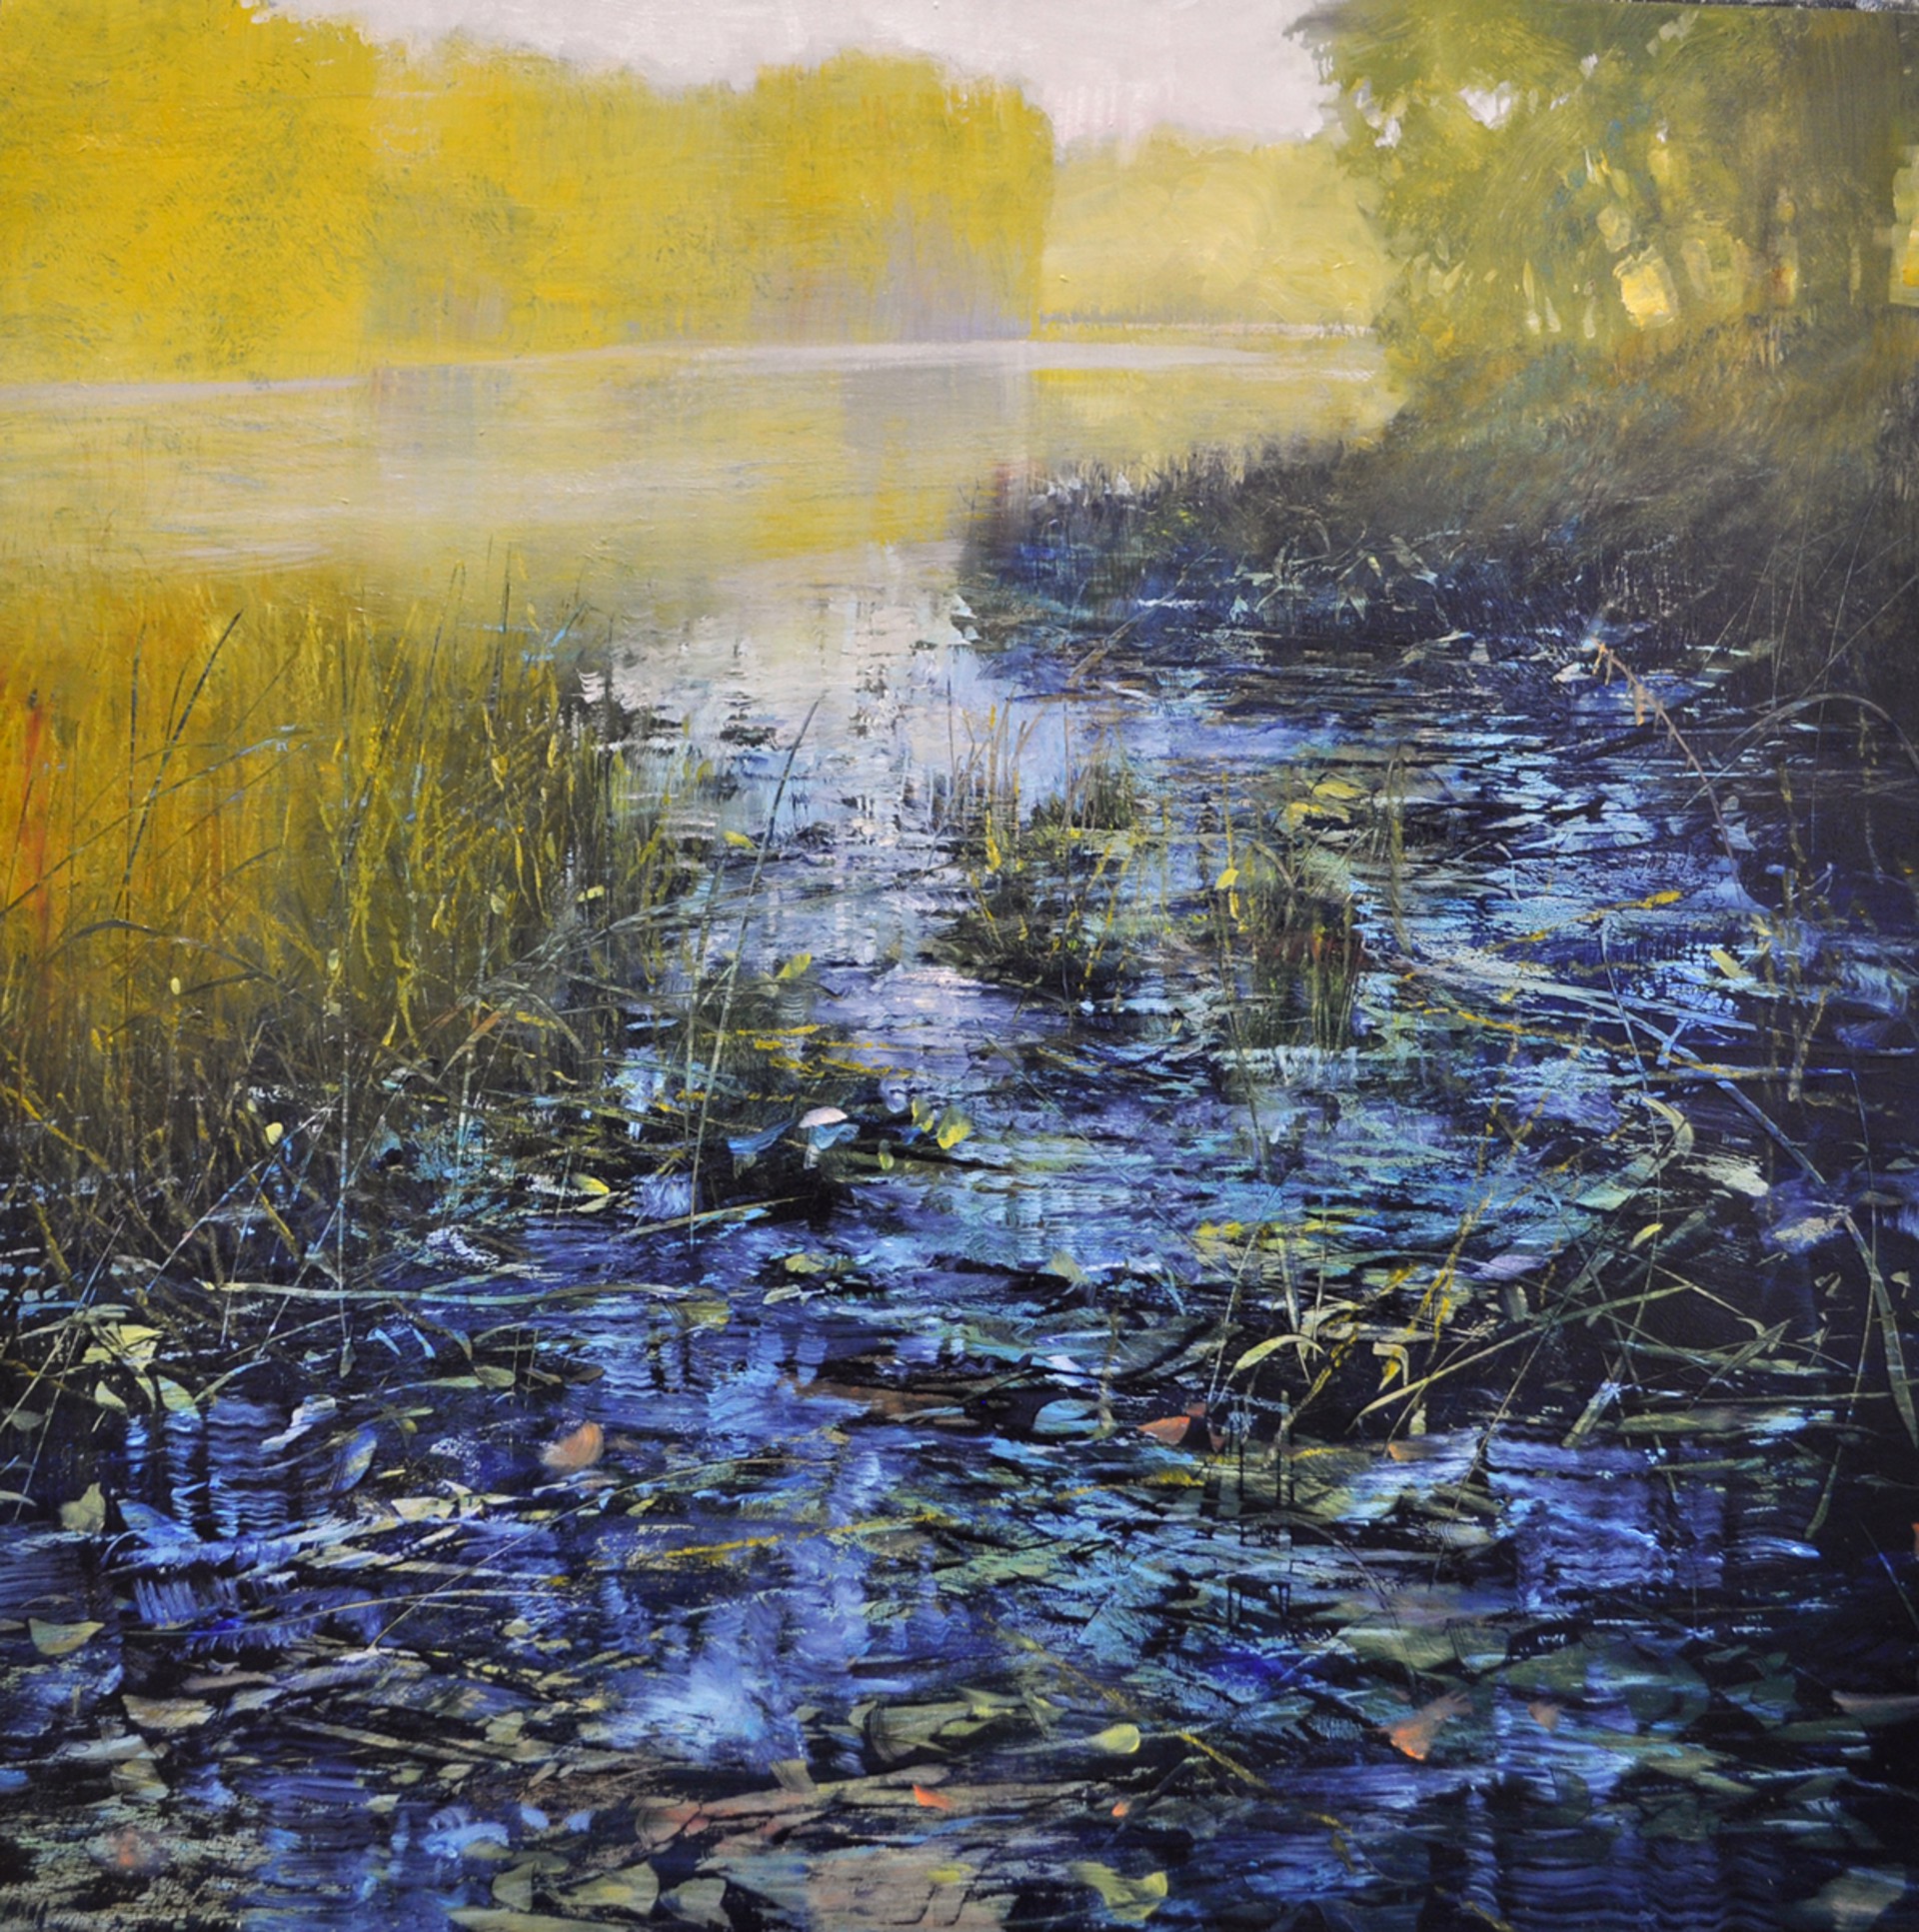 Blue River Shadows by David Dunlop